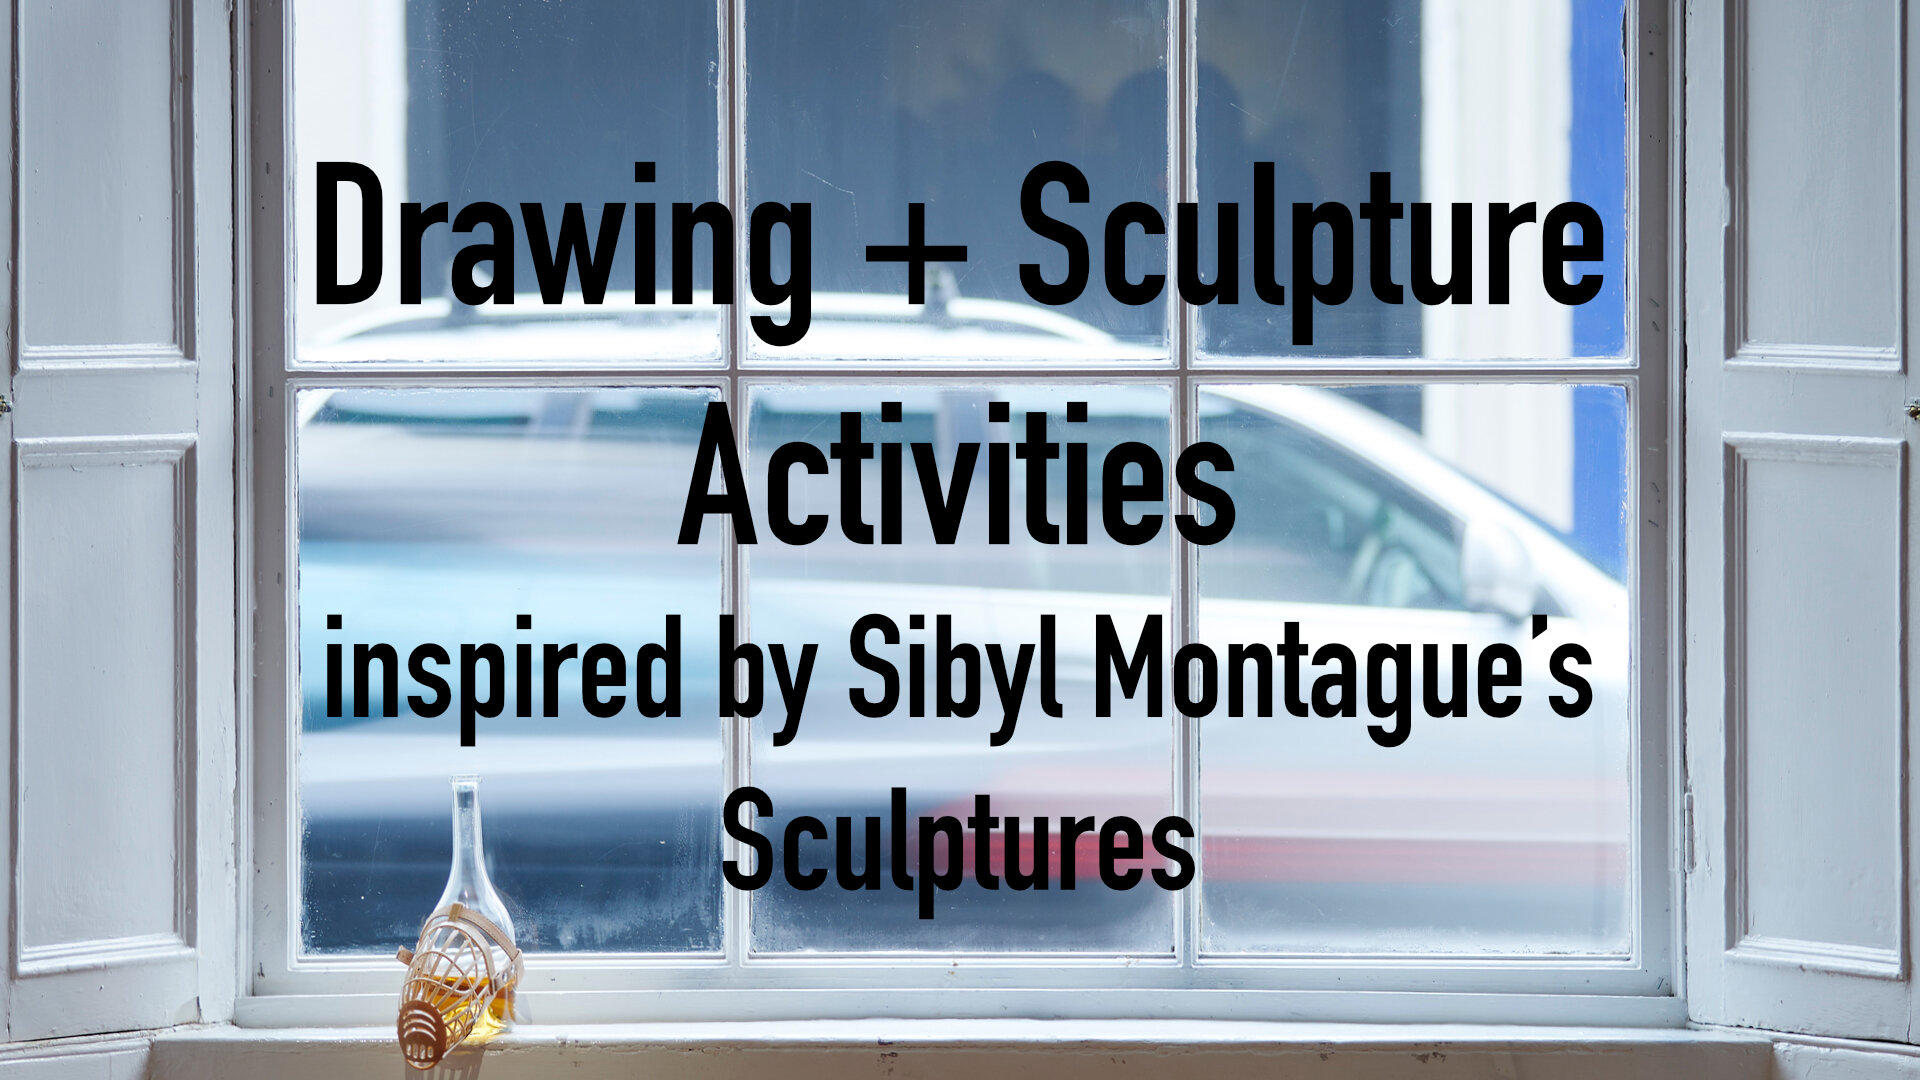 drawing + sculpture image banner.jpg